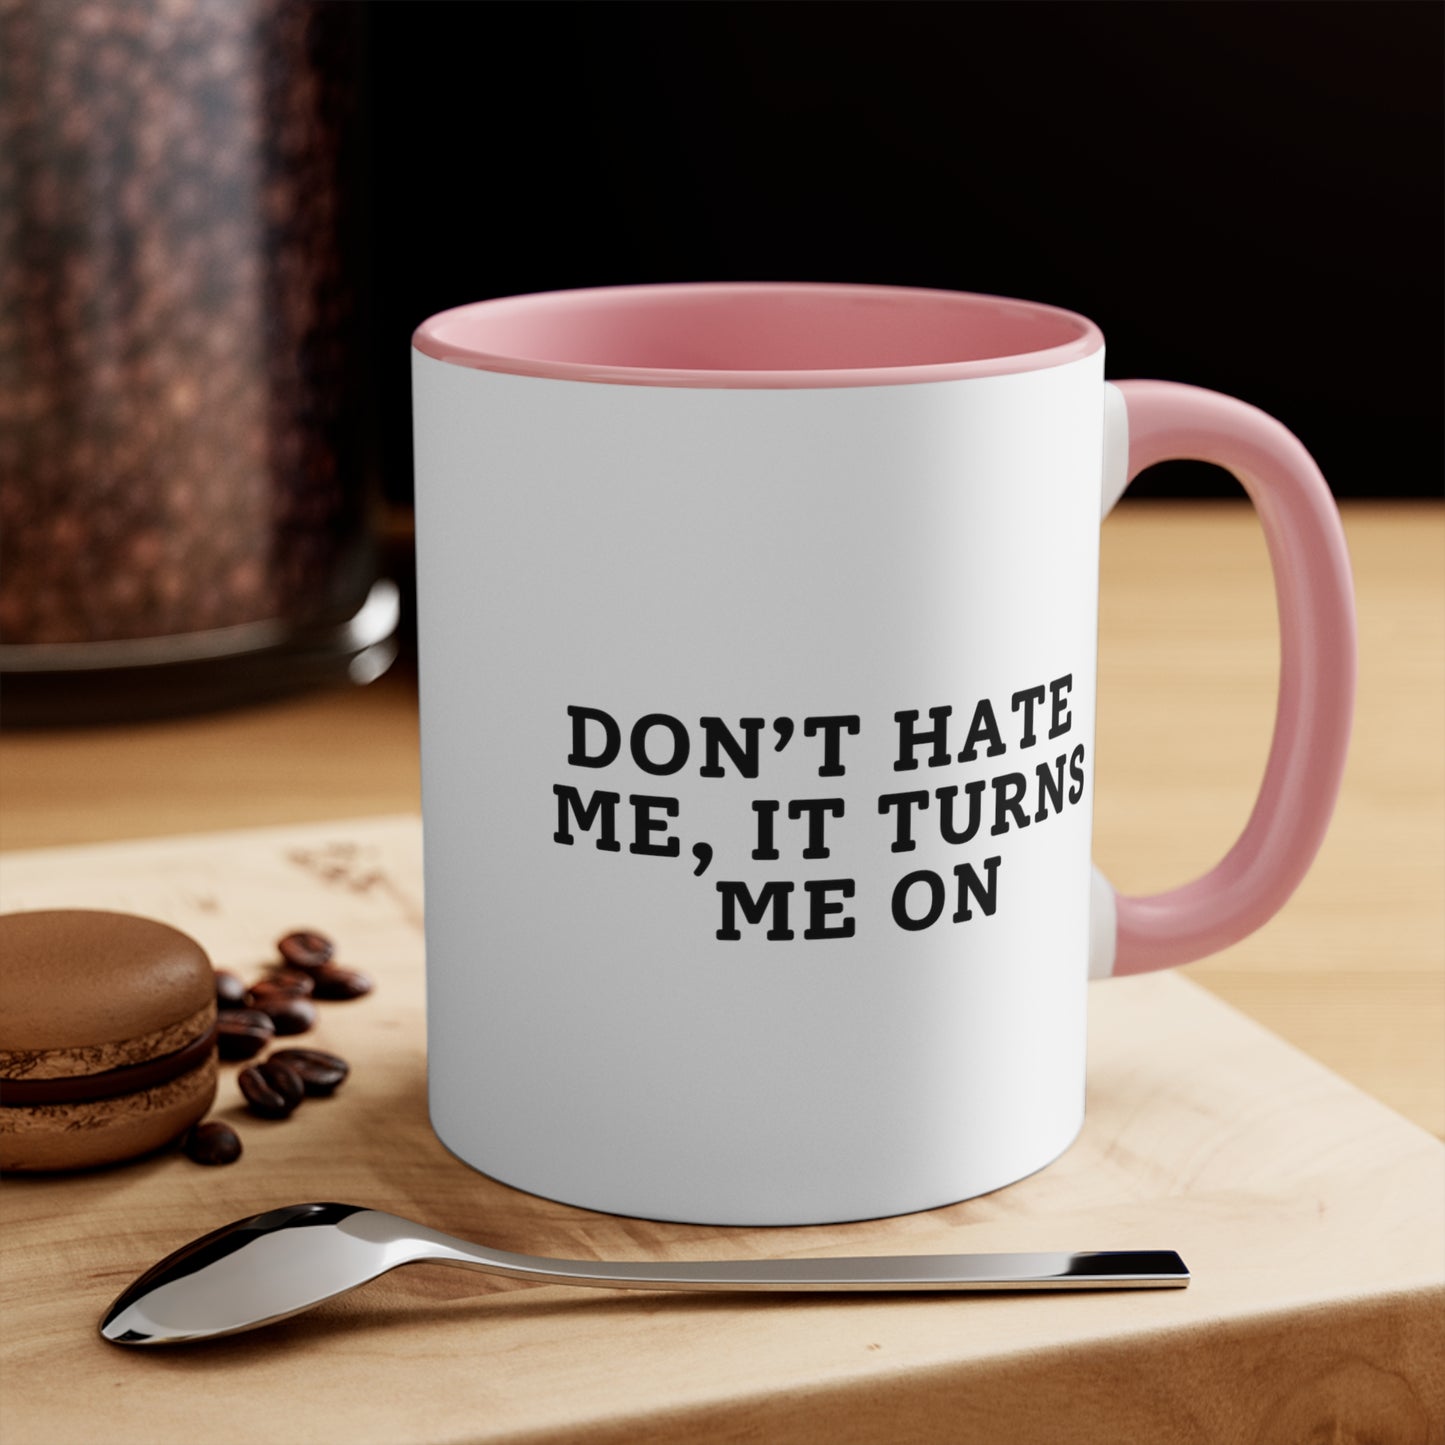 Don't Hate Me, It Turns Me On - Pink Mug